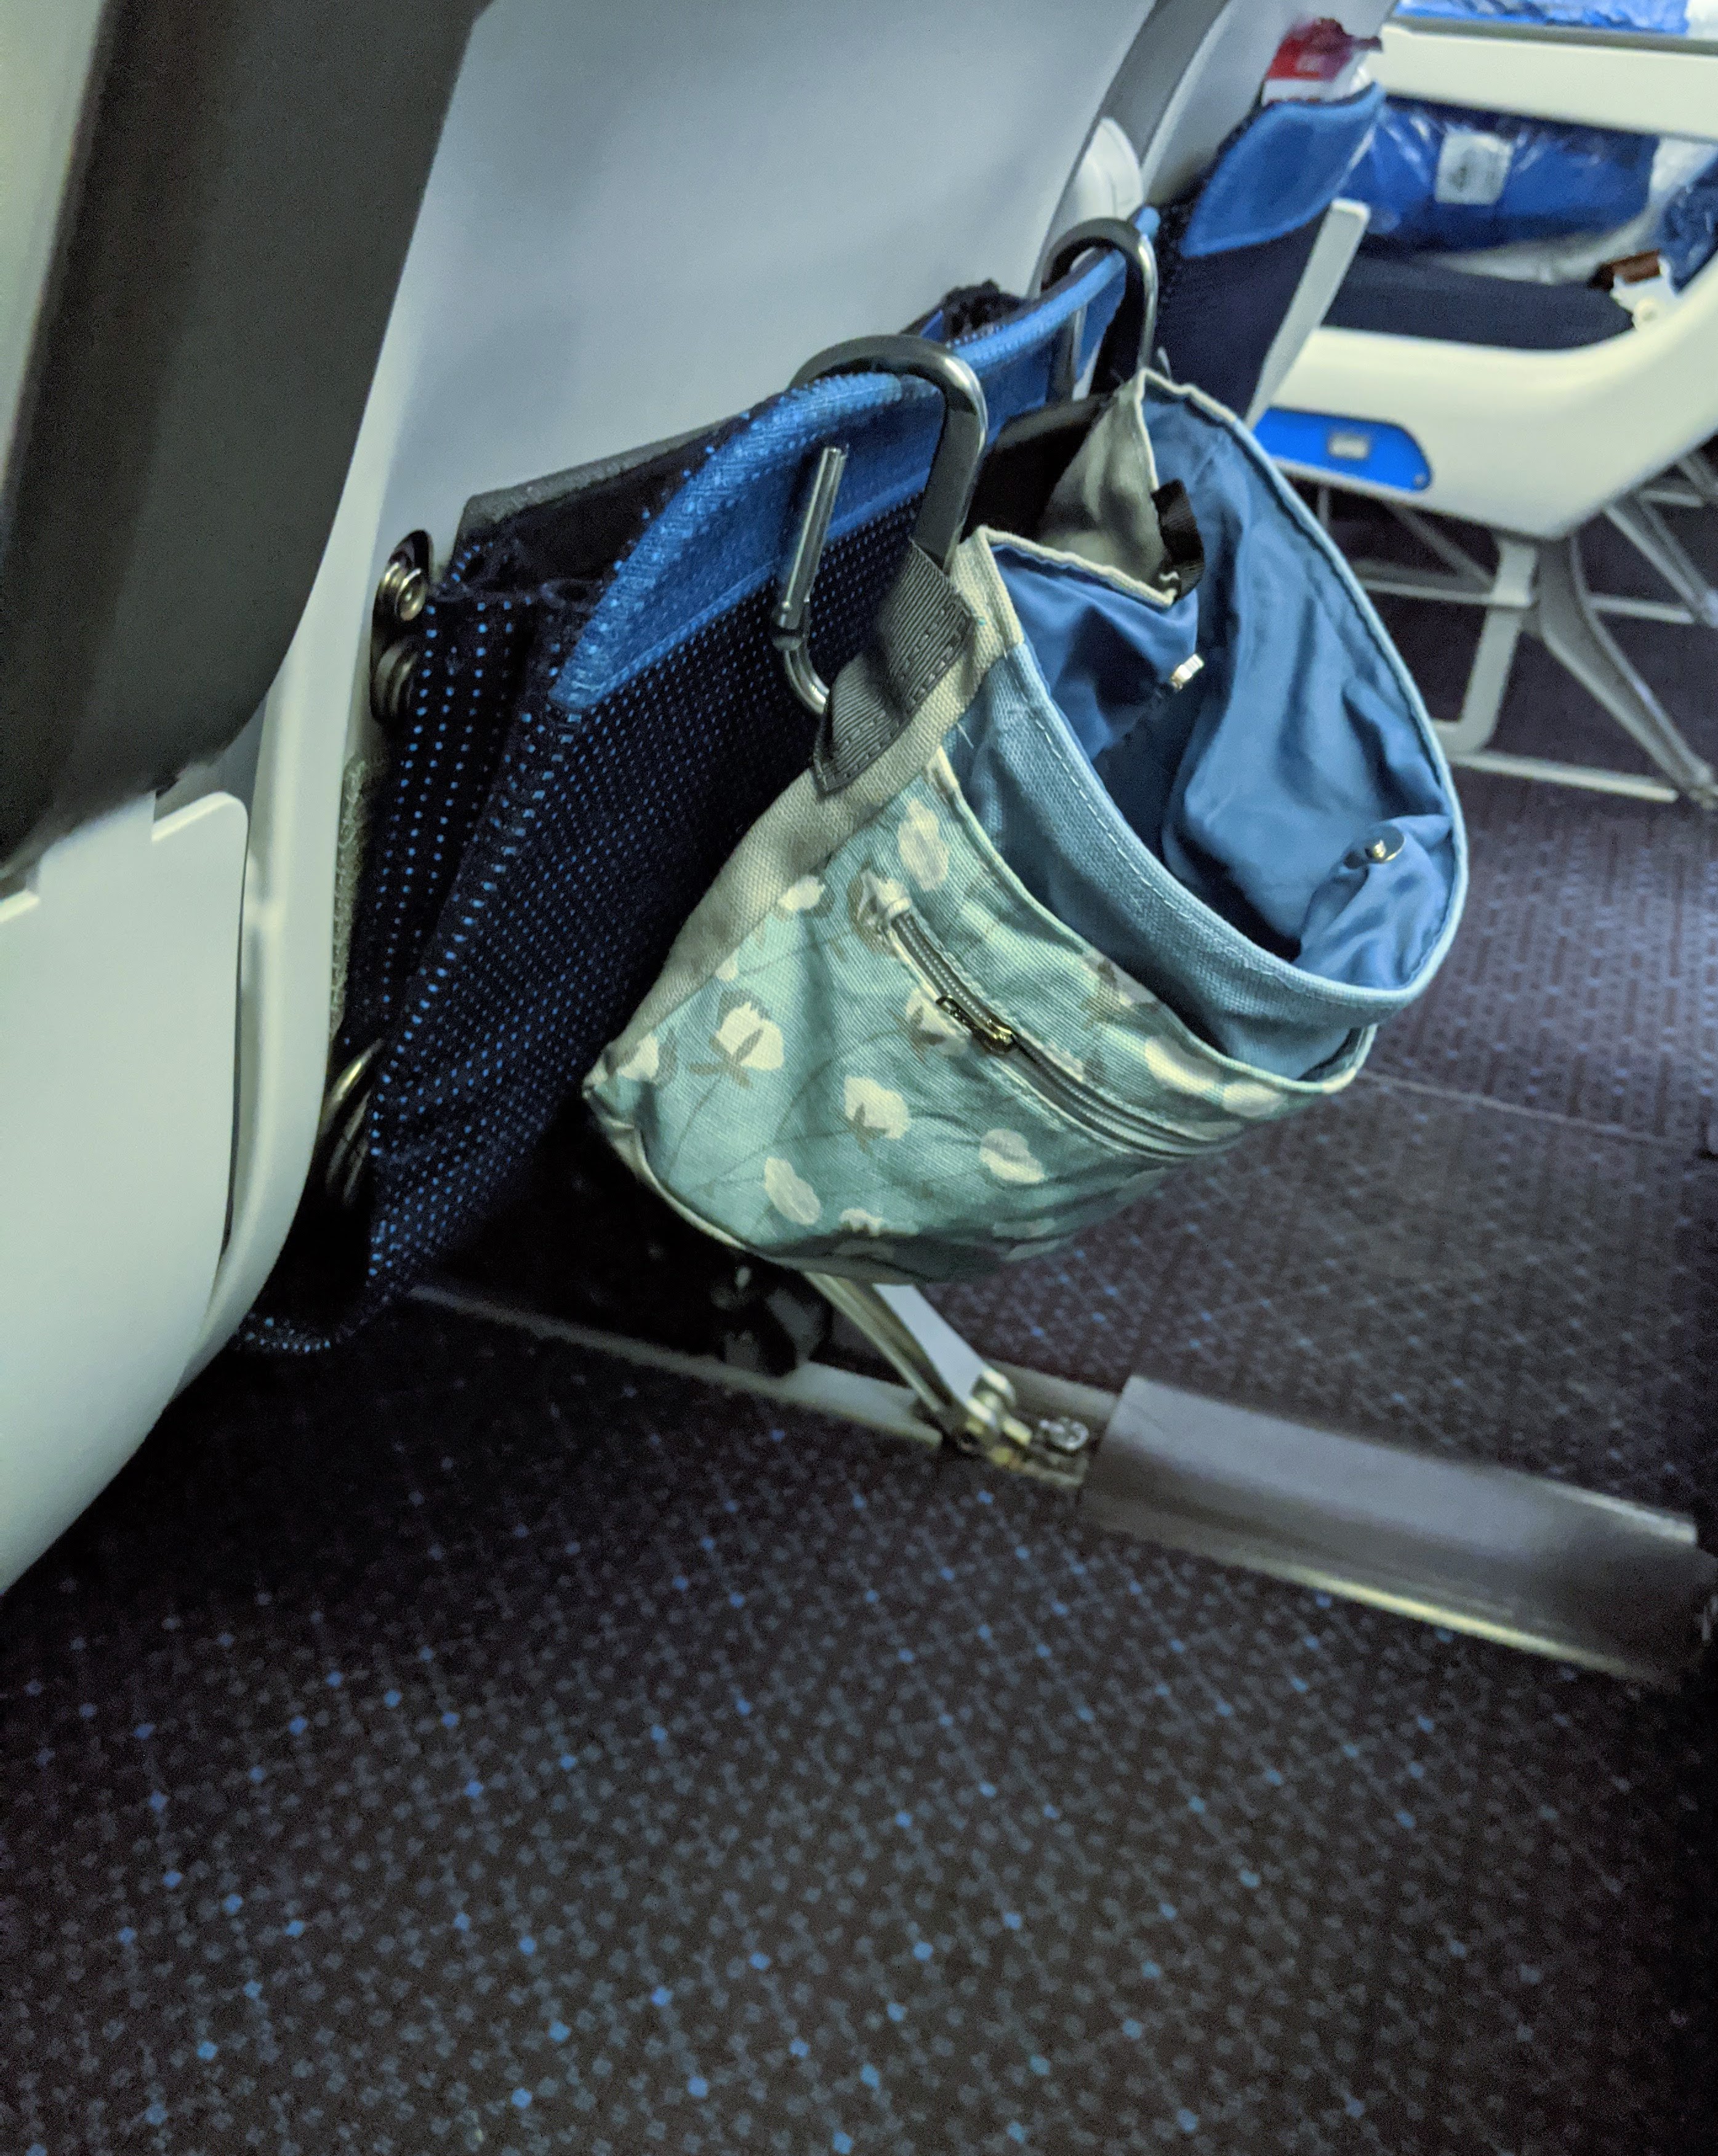 ikat bag: Airplane Bag